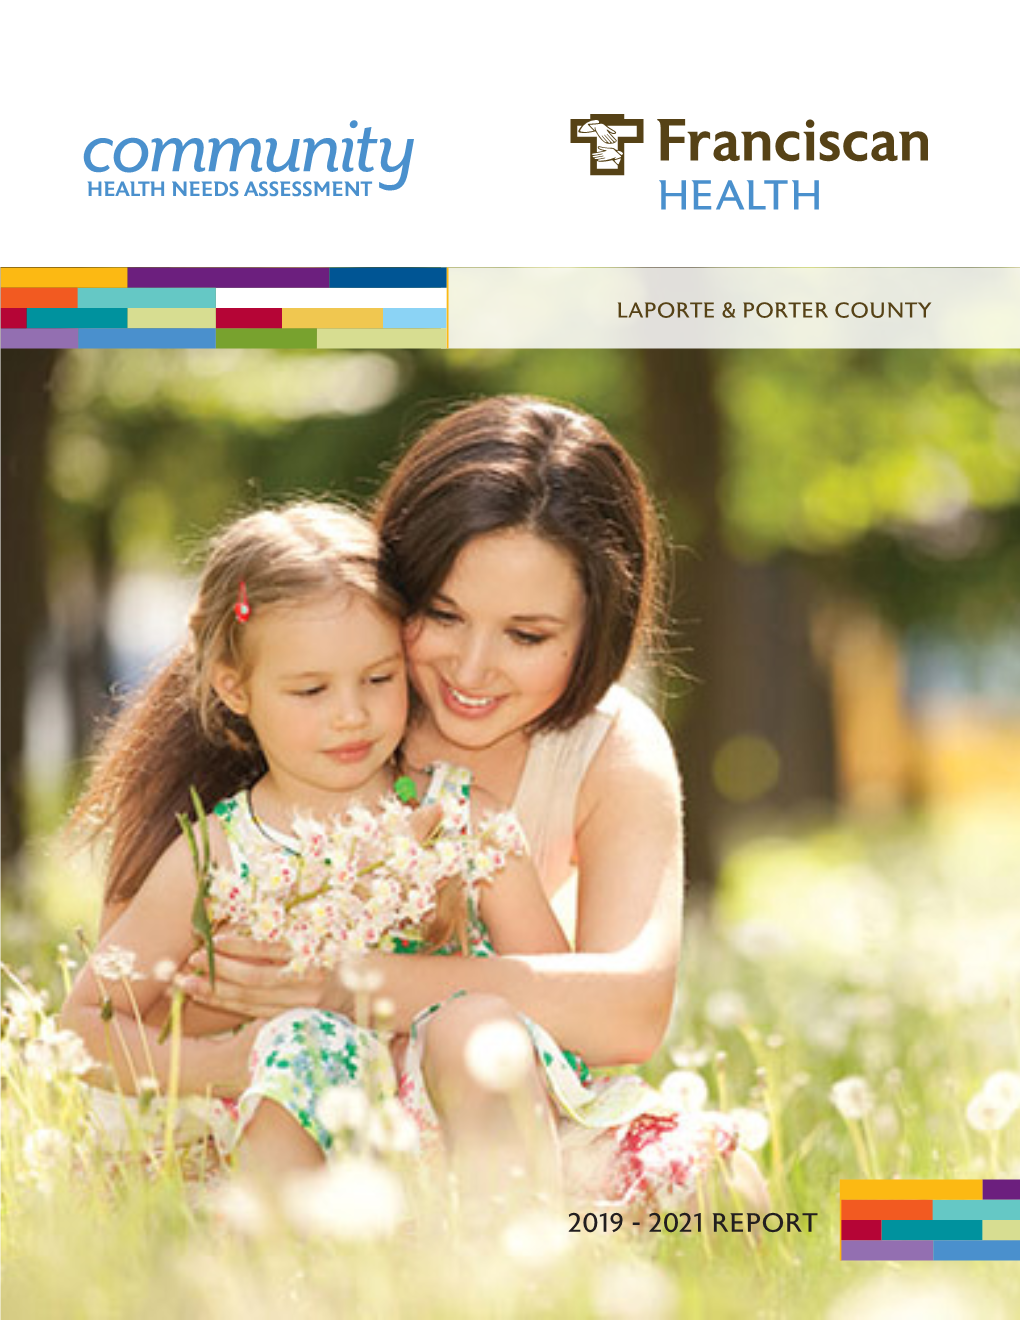 Community HEALTH NEEDS ASSESSMENT